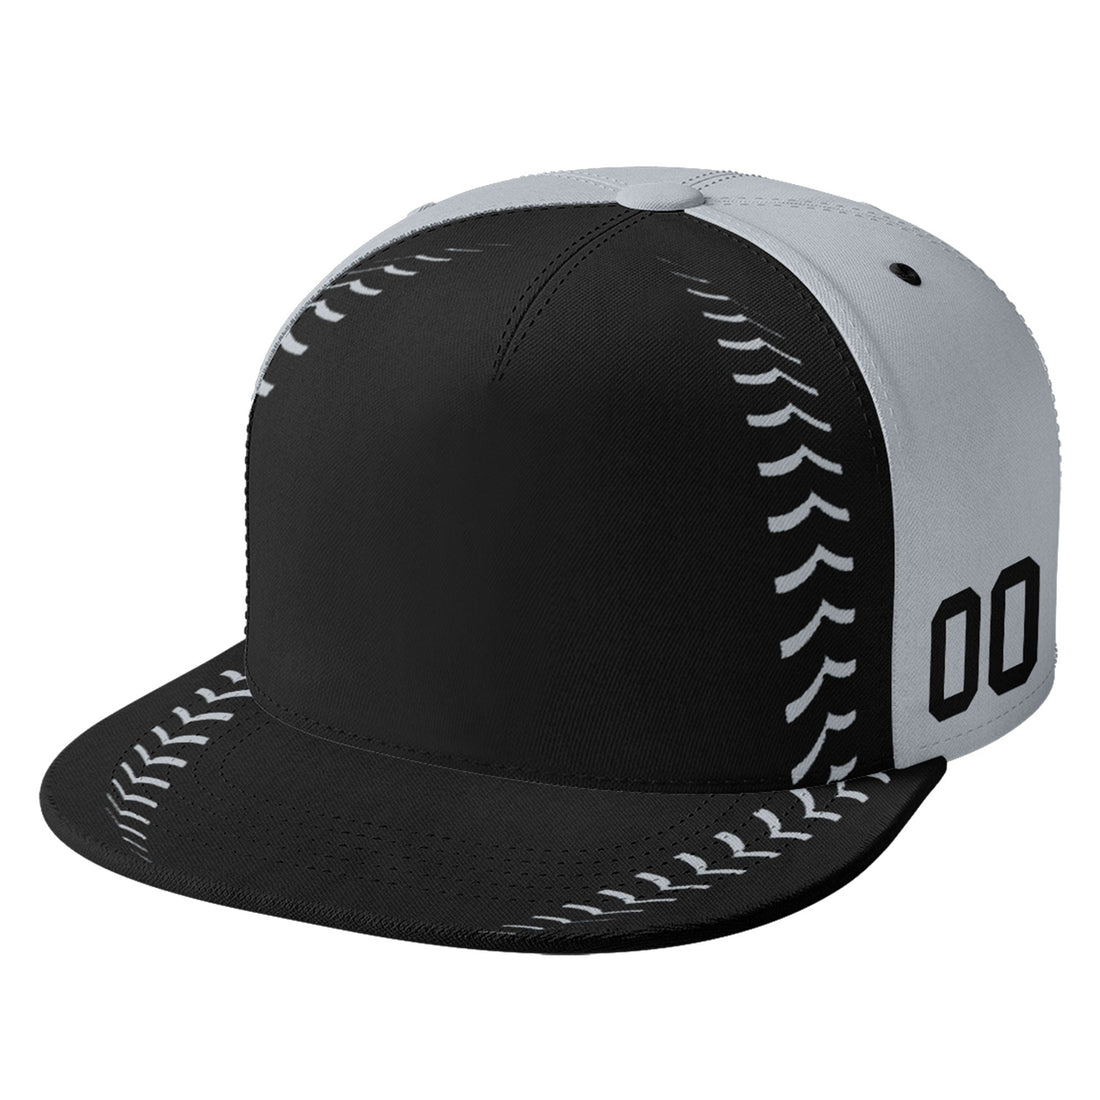 Custom Sport Design Hat Stitched Adjustable Snapback Personalized Baseball Cap PR067B-bd0b00d9-d